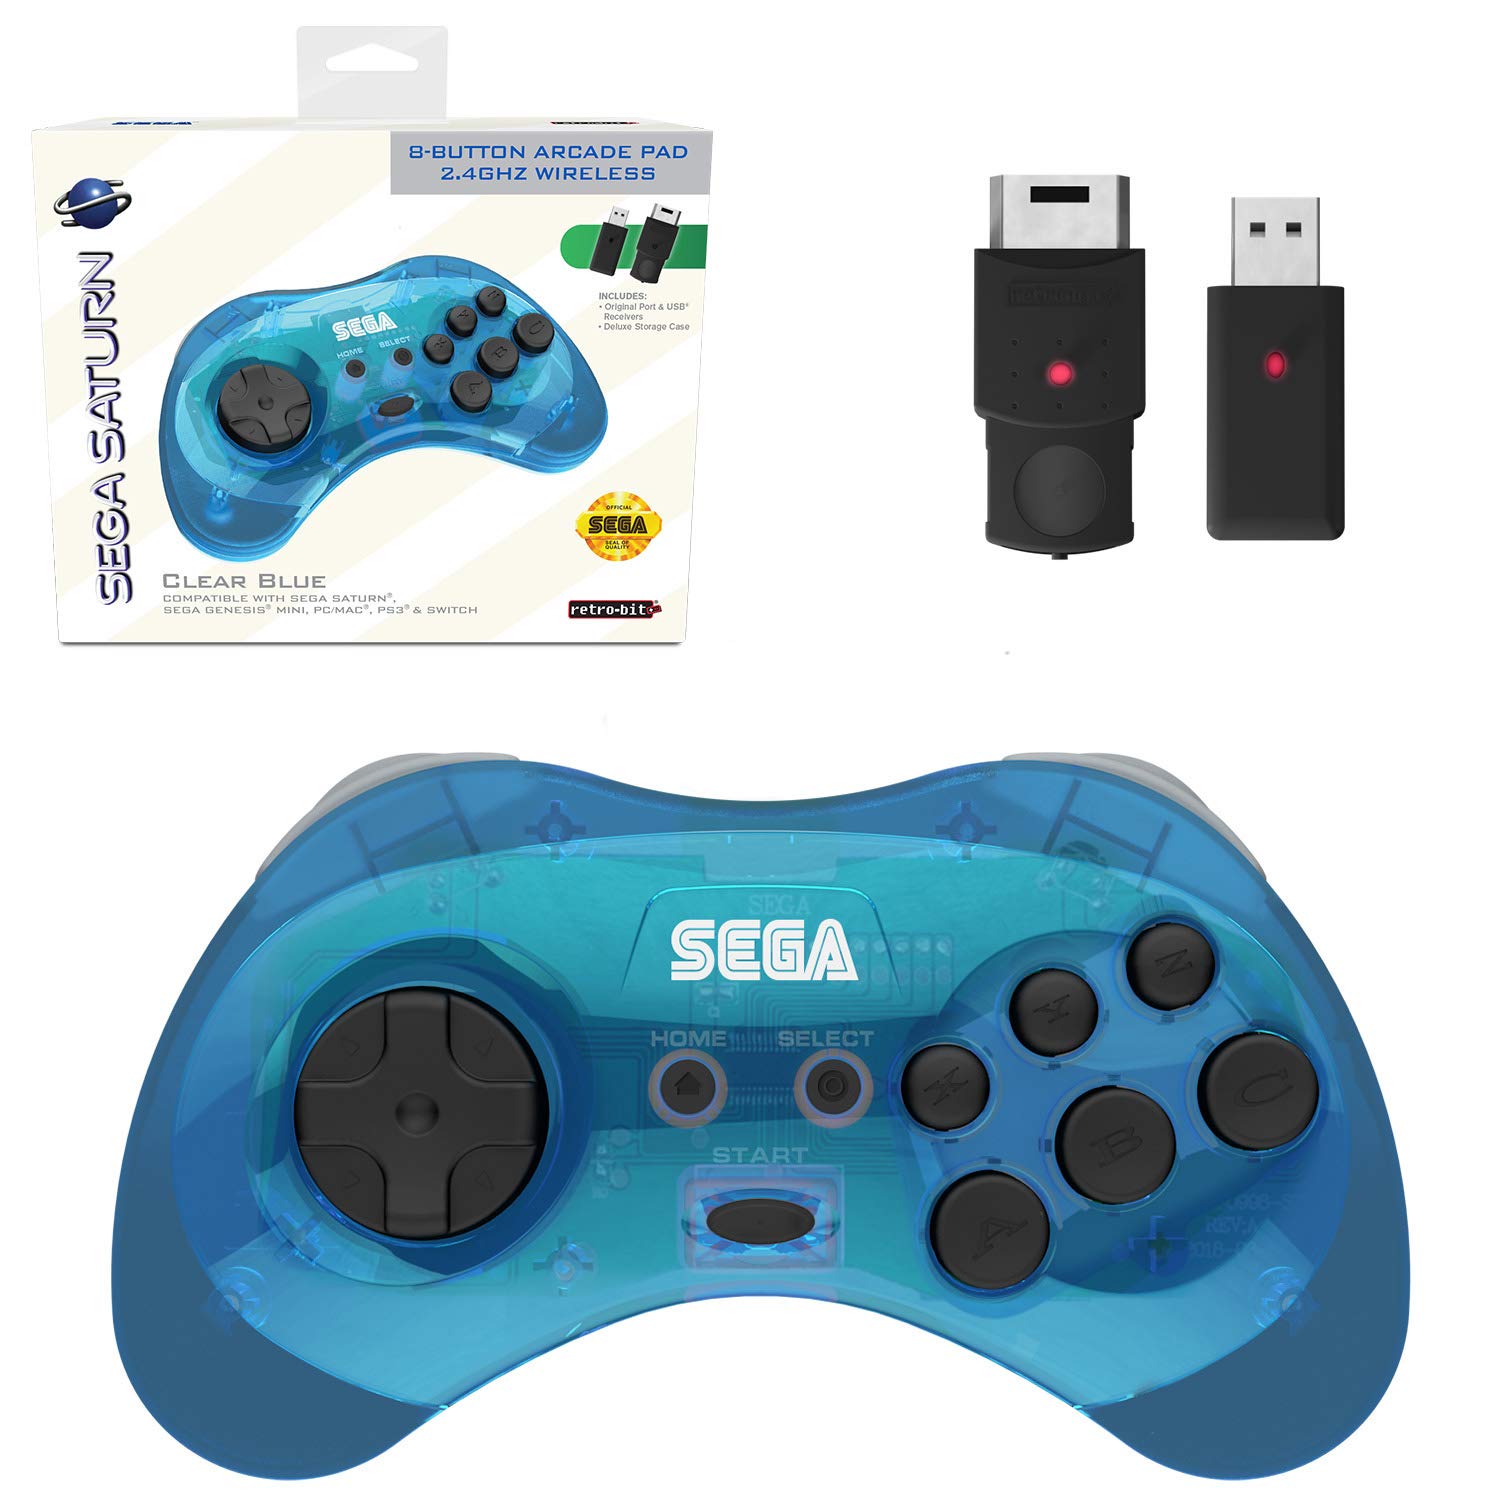 Book Cover Retro-Bit Official Sega Saturn 2.4 GHz Wireless Controller 8-Button Arcade Pad for Sega Saturn, Sega Genesis Mini, Switch, PS3, PC, Mac - Includes 2 Receivers & Storage Case (Clear Blue)